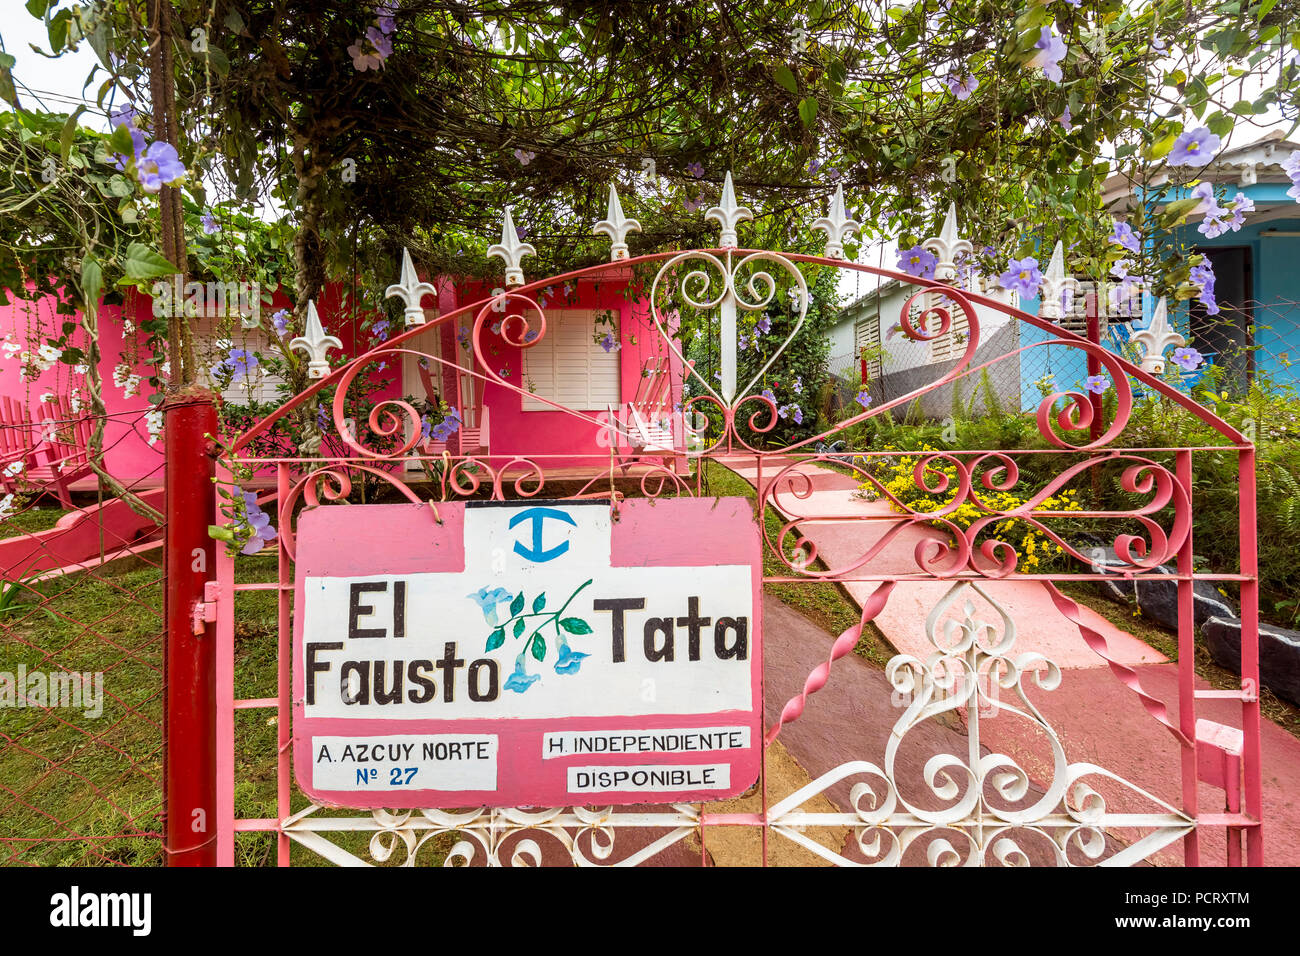 Rosa Haus mit Treppen, casa particular, private Wohnung in Kuba, El Fausto Tata, Viñales, Kuba, Pinar del Río, Kuba, Reisen, Insel, Großen Antillen, Stockfoto